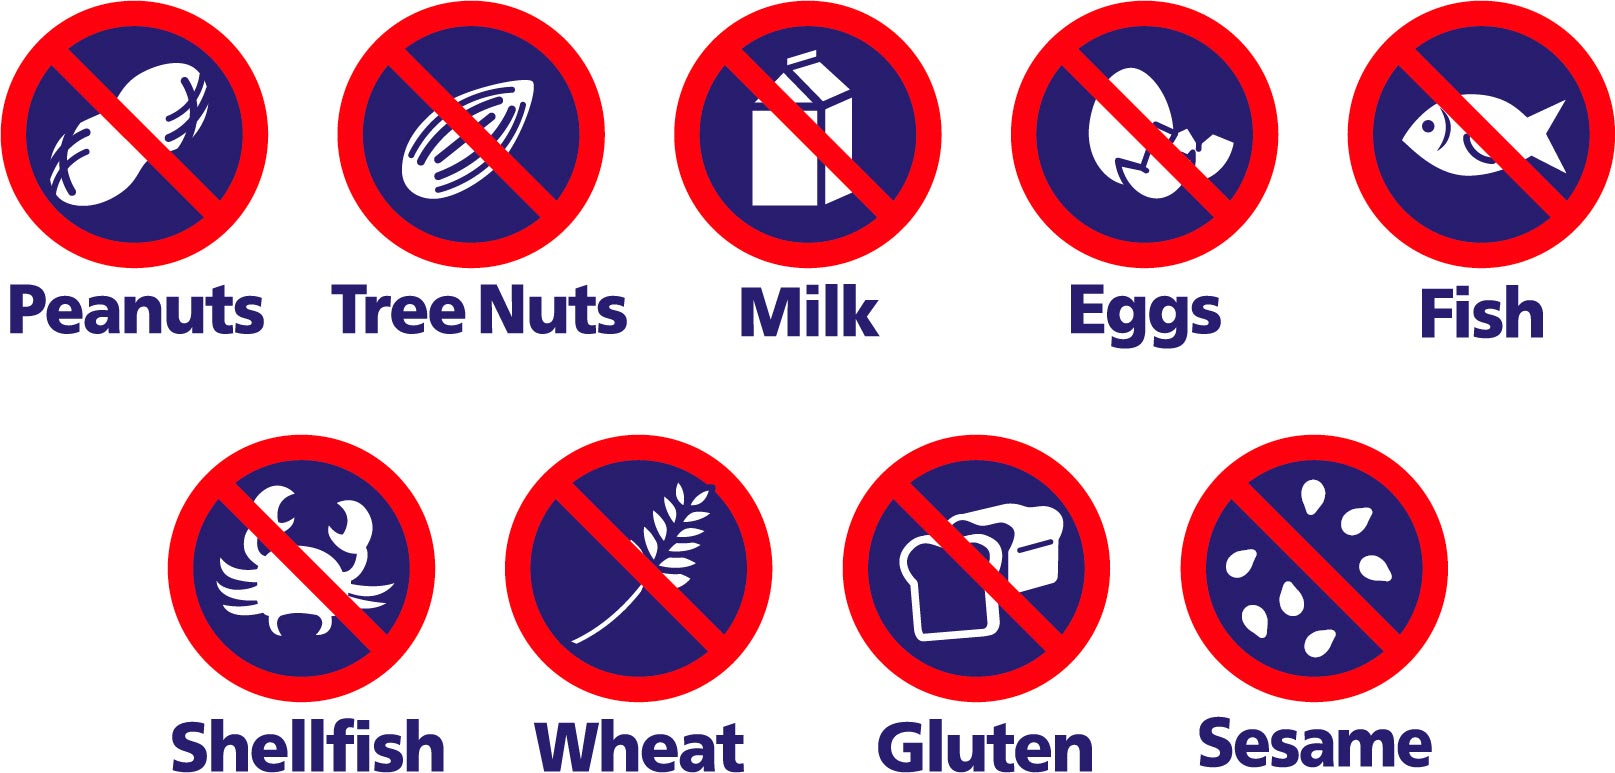 Dum Dums are free of peanuts, tree nuts, milk, eggs, fish, shellfish, wheat, gluten, and sesame